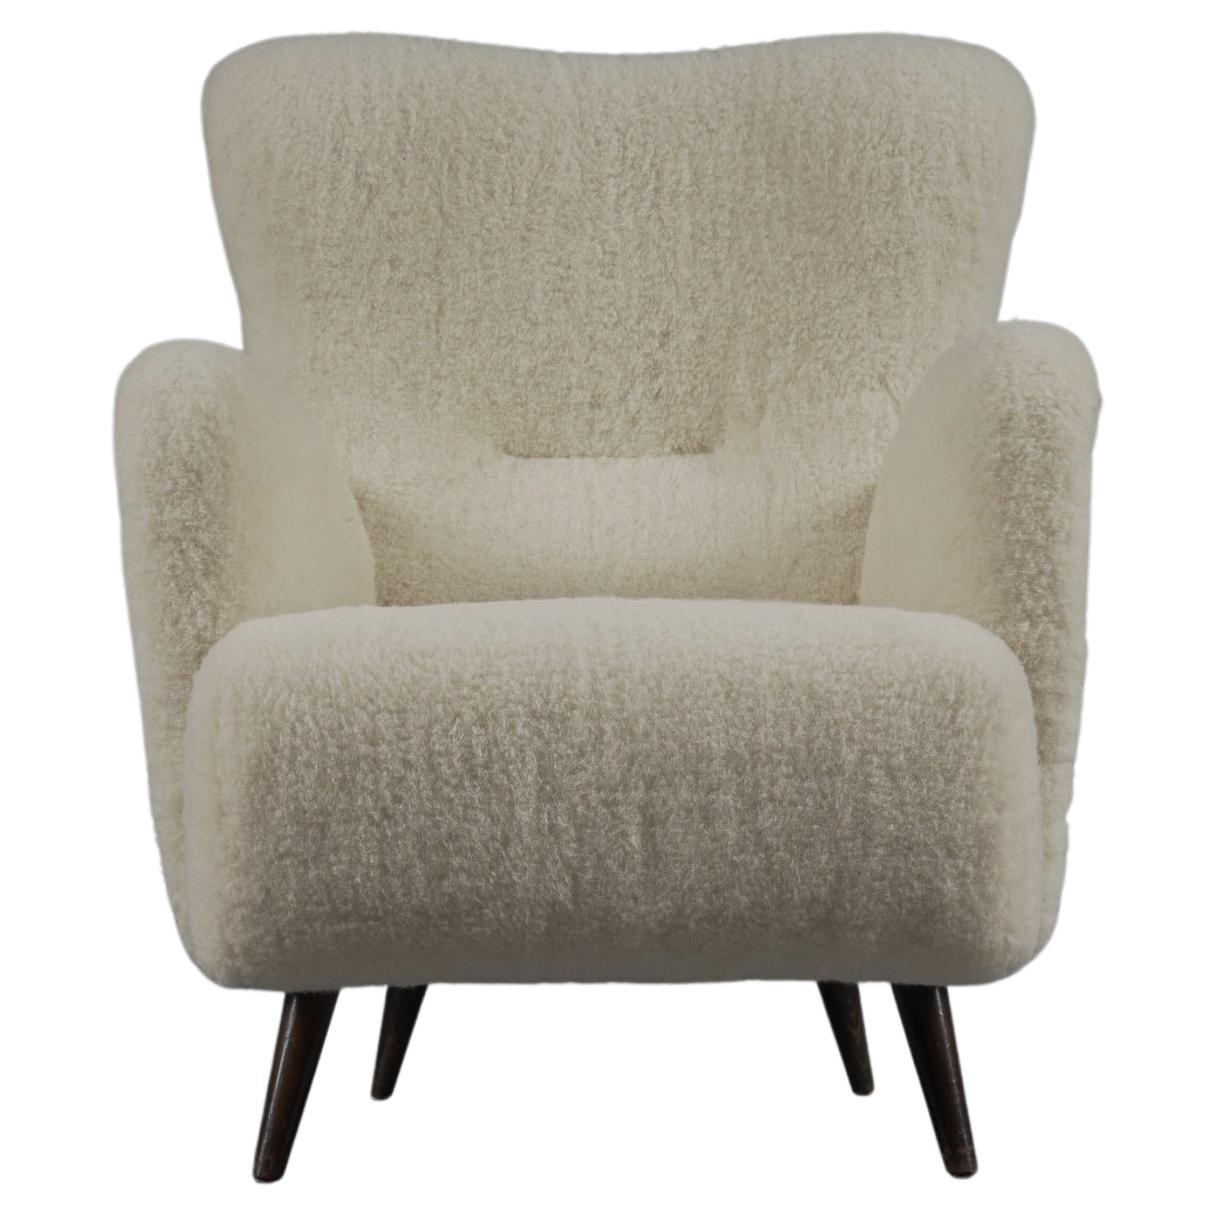 Lovely Mid-Century Modern Wingback Chair in sheepskin wool fabric, 1950s 